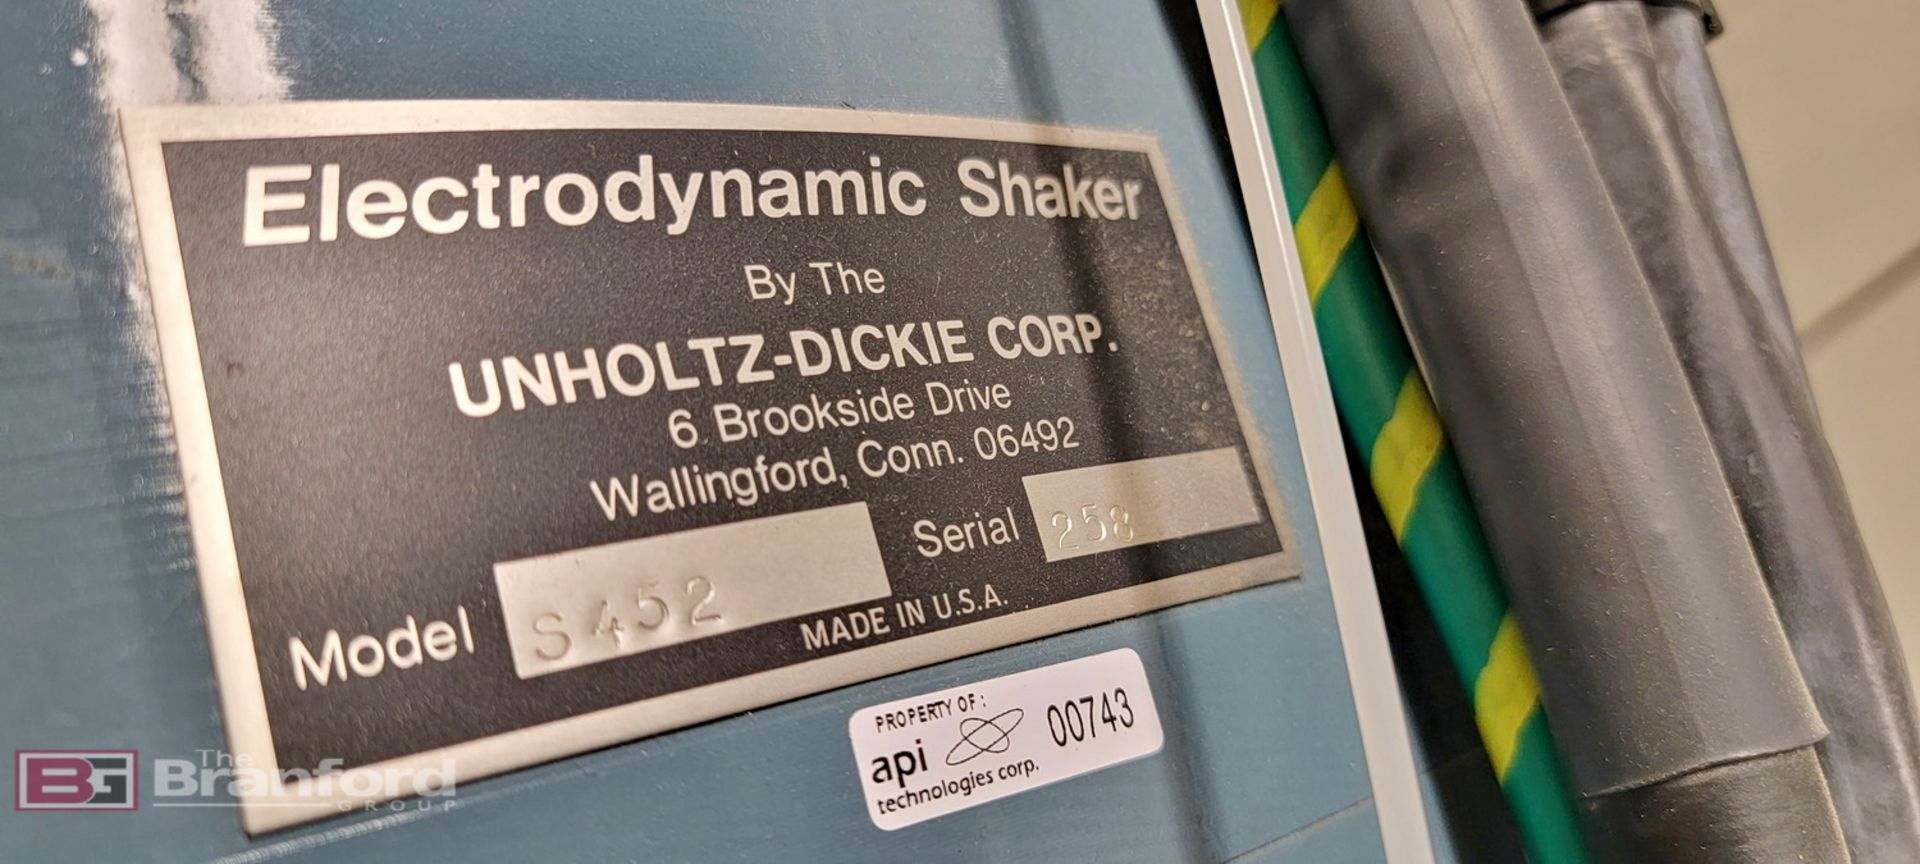 Unholtz-Dickie (UDC) S452 electrodynamic shaker system - Image 8 of 10